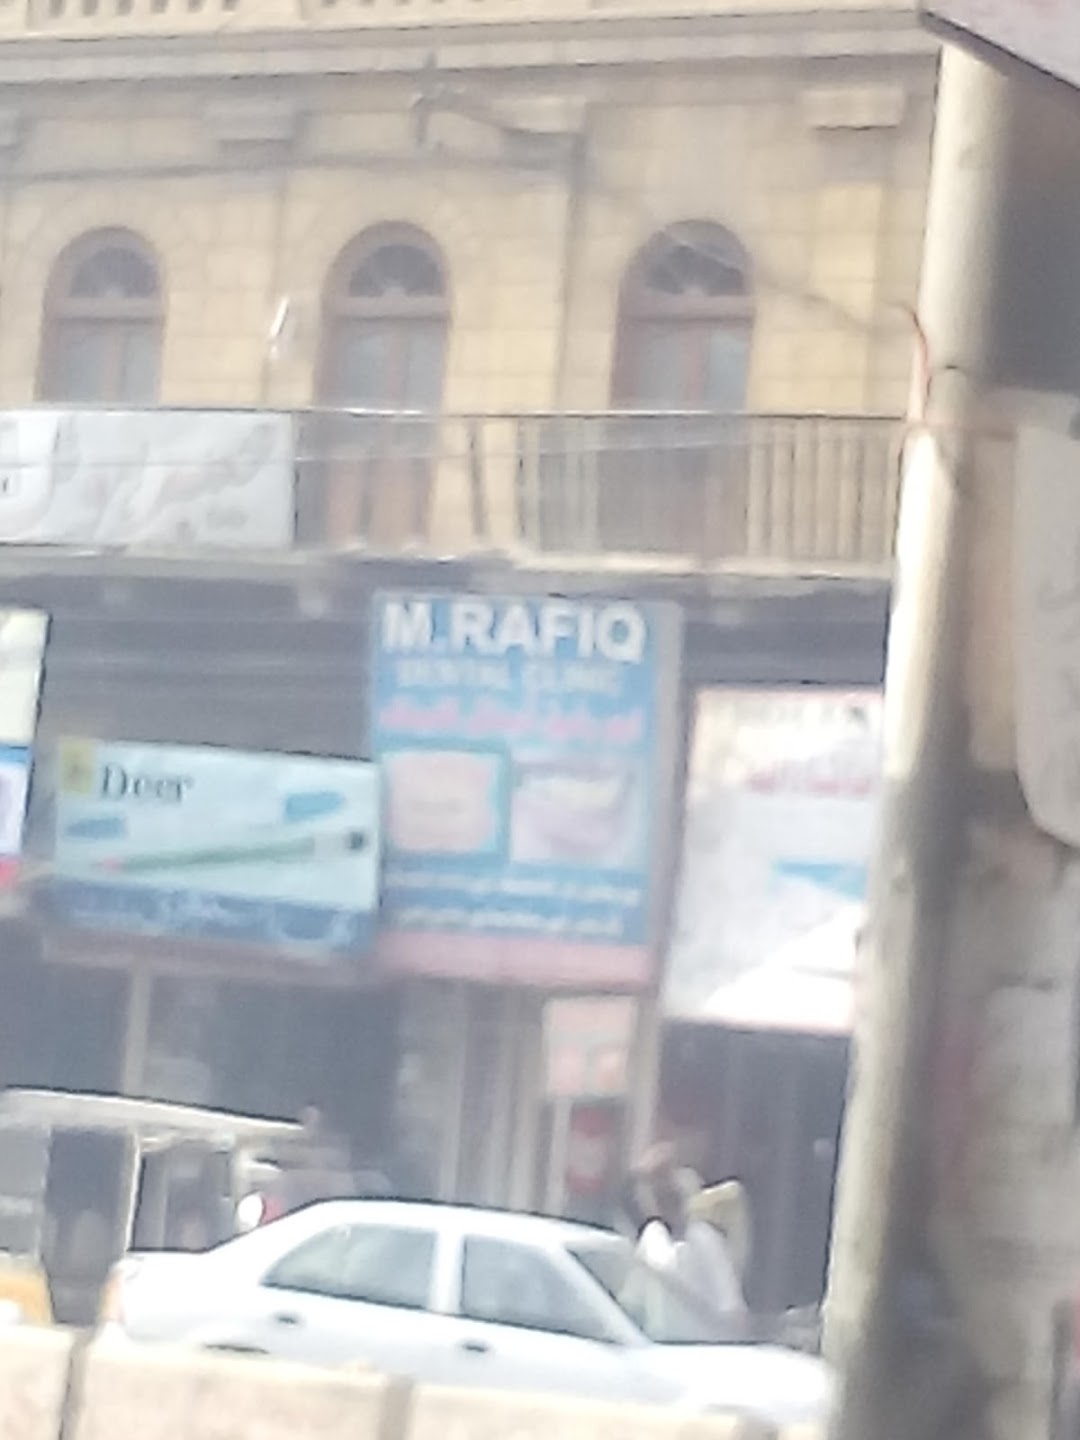 Mohammad Rafiq Dental Clinic